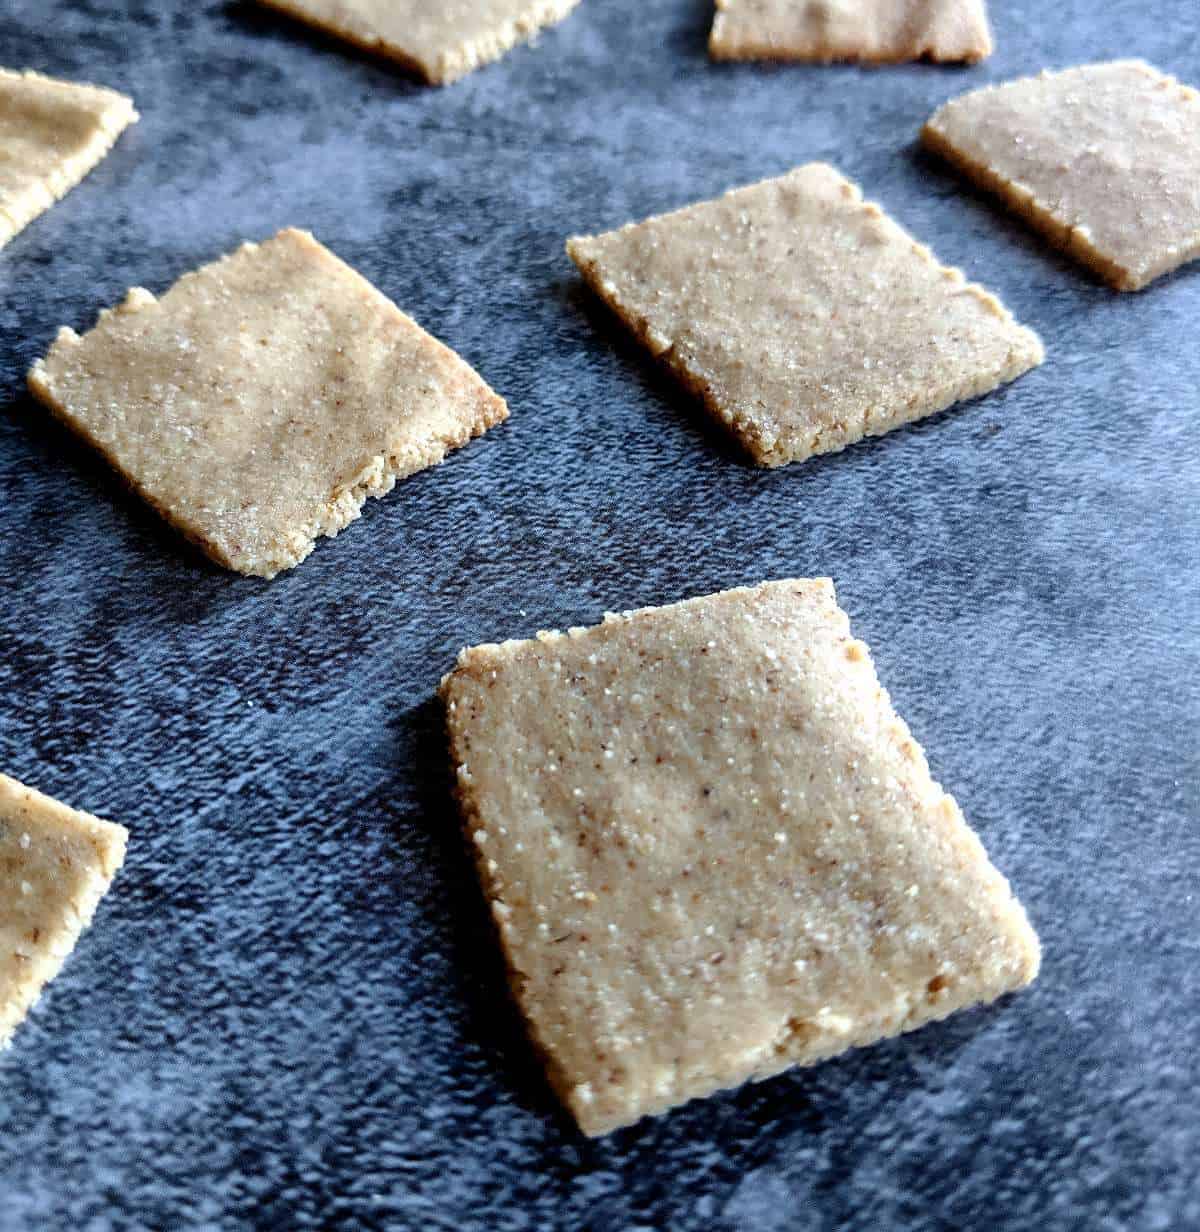 Tigernut flour crackers on a blue surface.